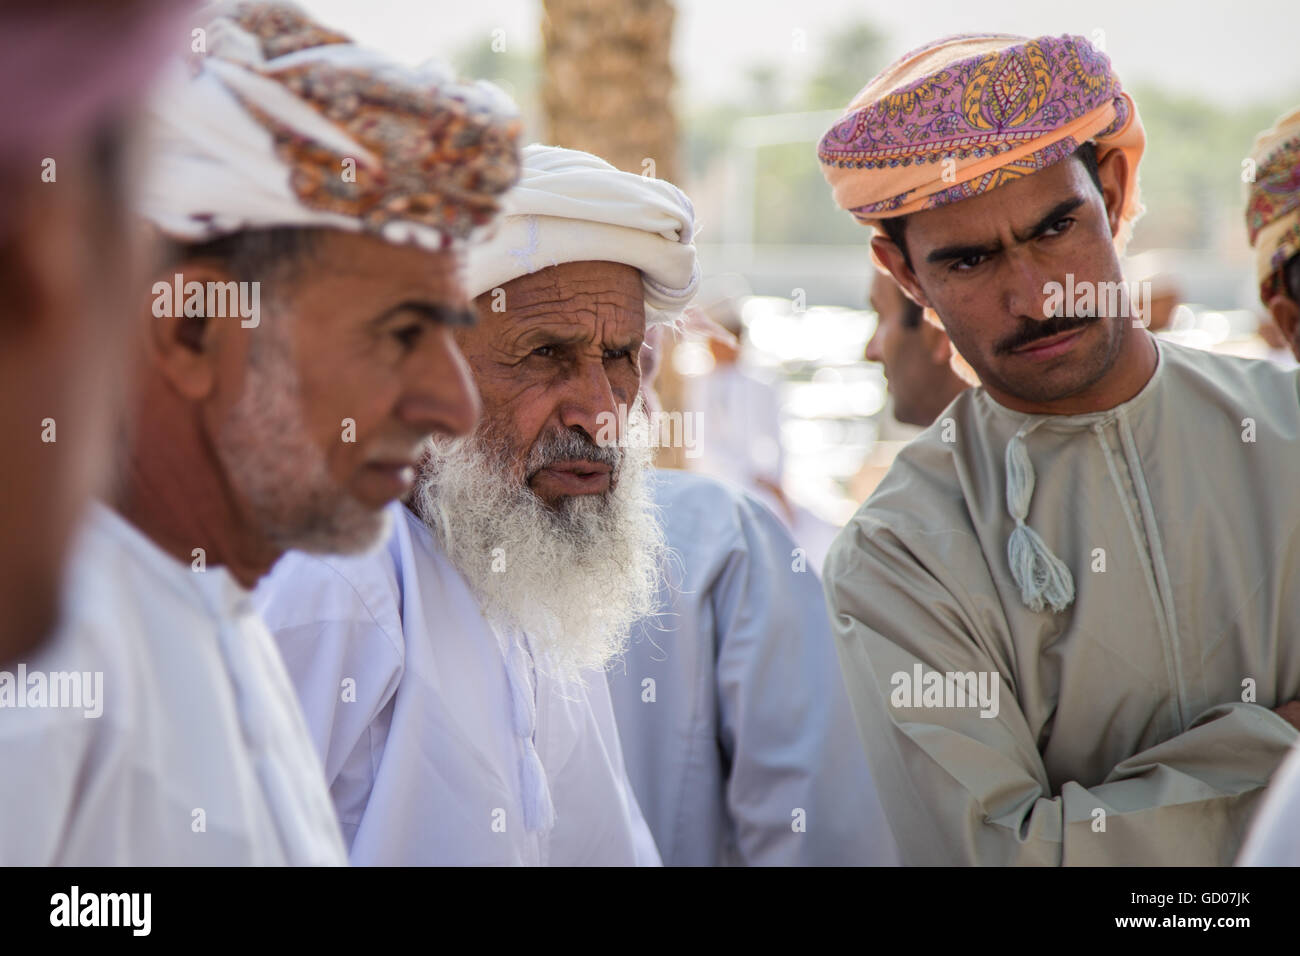 NIZWA, OMAN - APRIL 24 2015:Omani men at the traditional cattle market or souq in Nizwa, Oman. Stock Photo